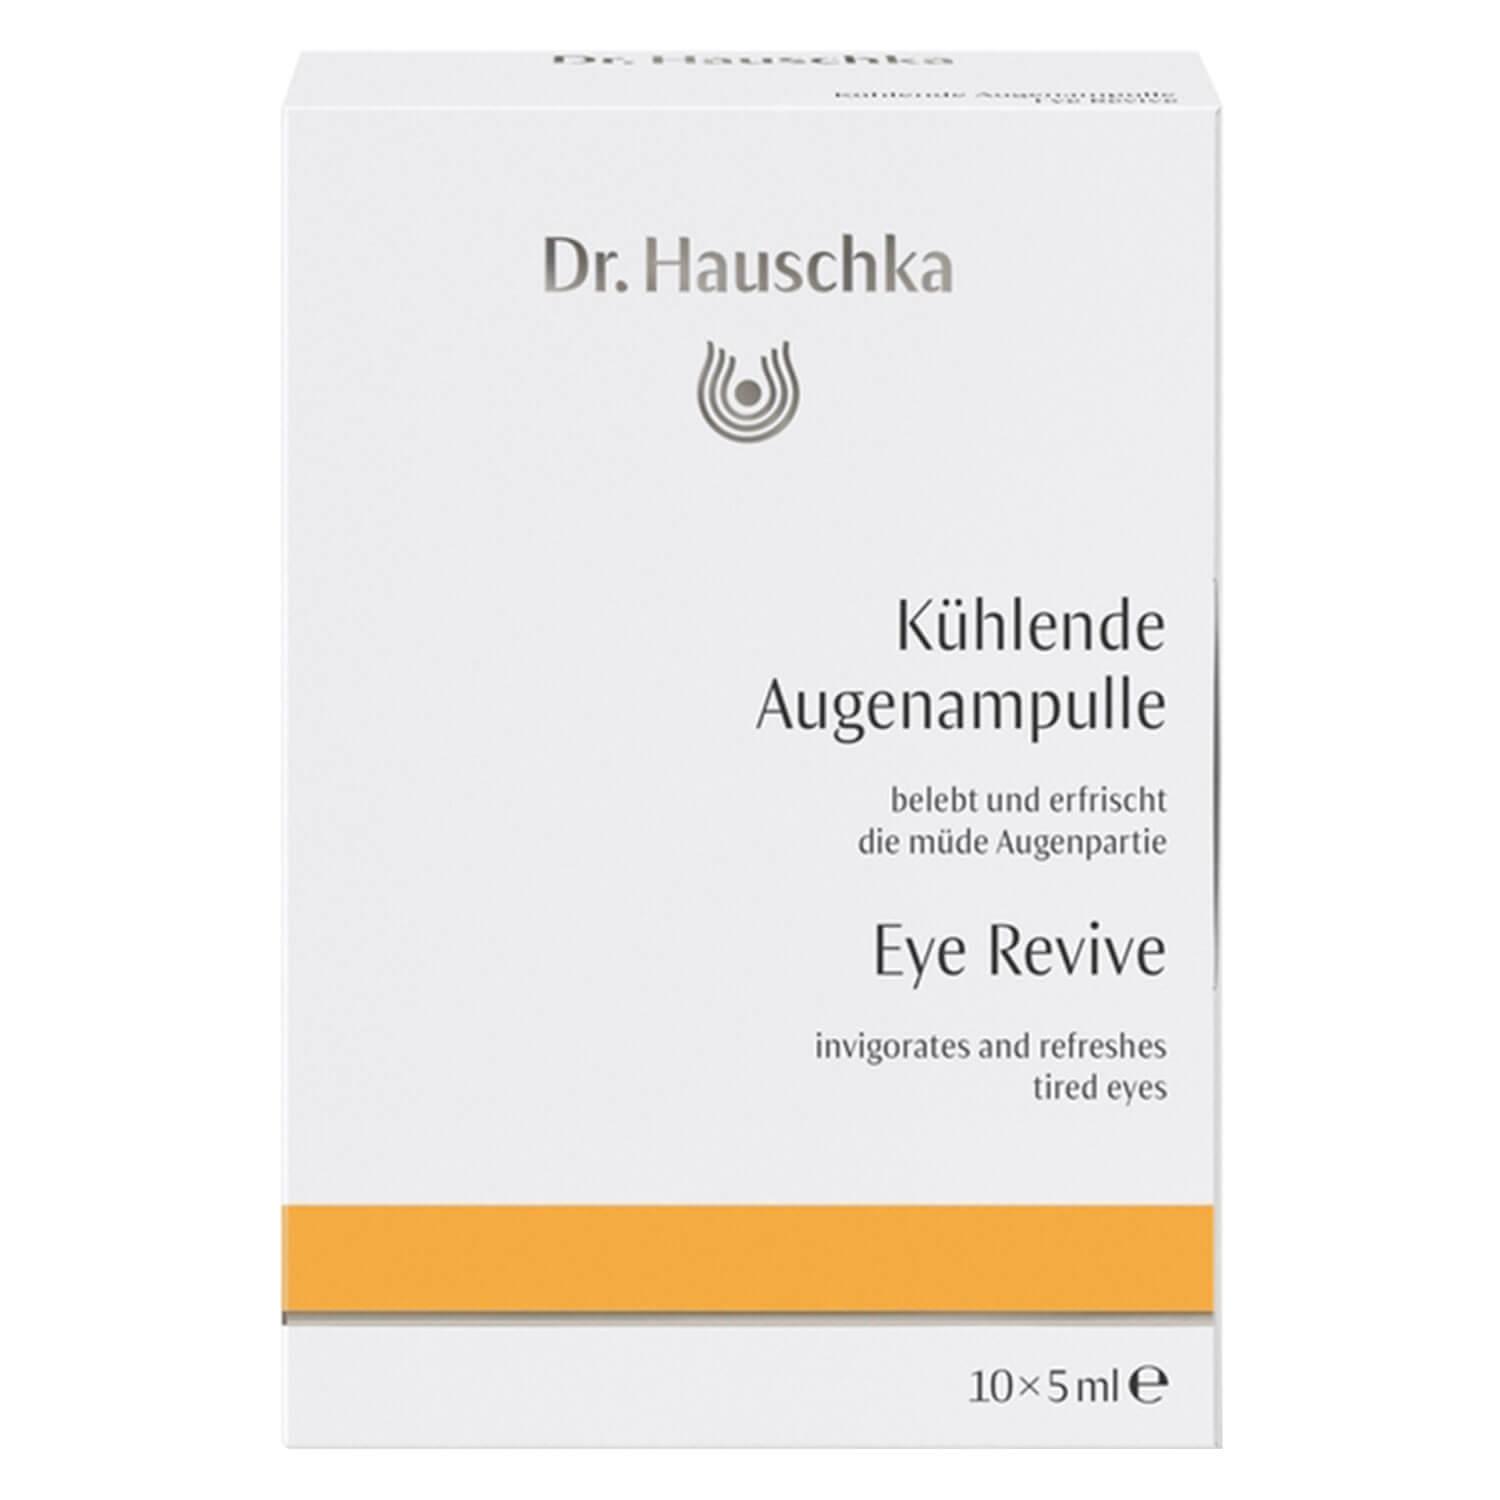 Dr. Hauschka - Kühlende Augenampulle